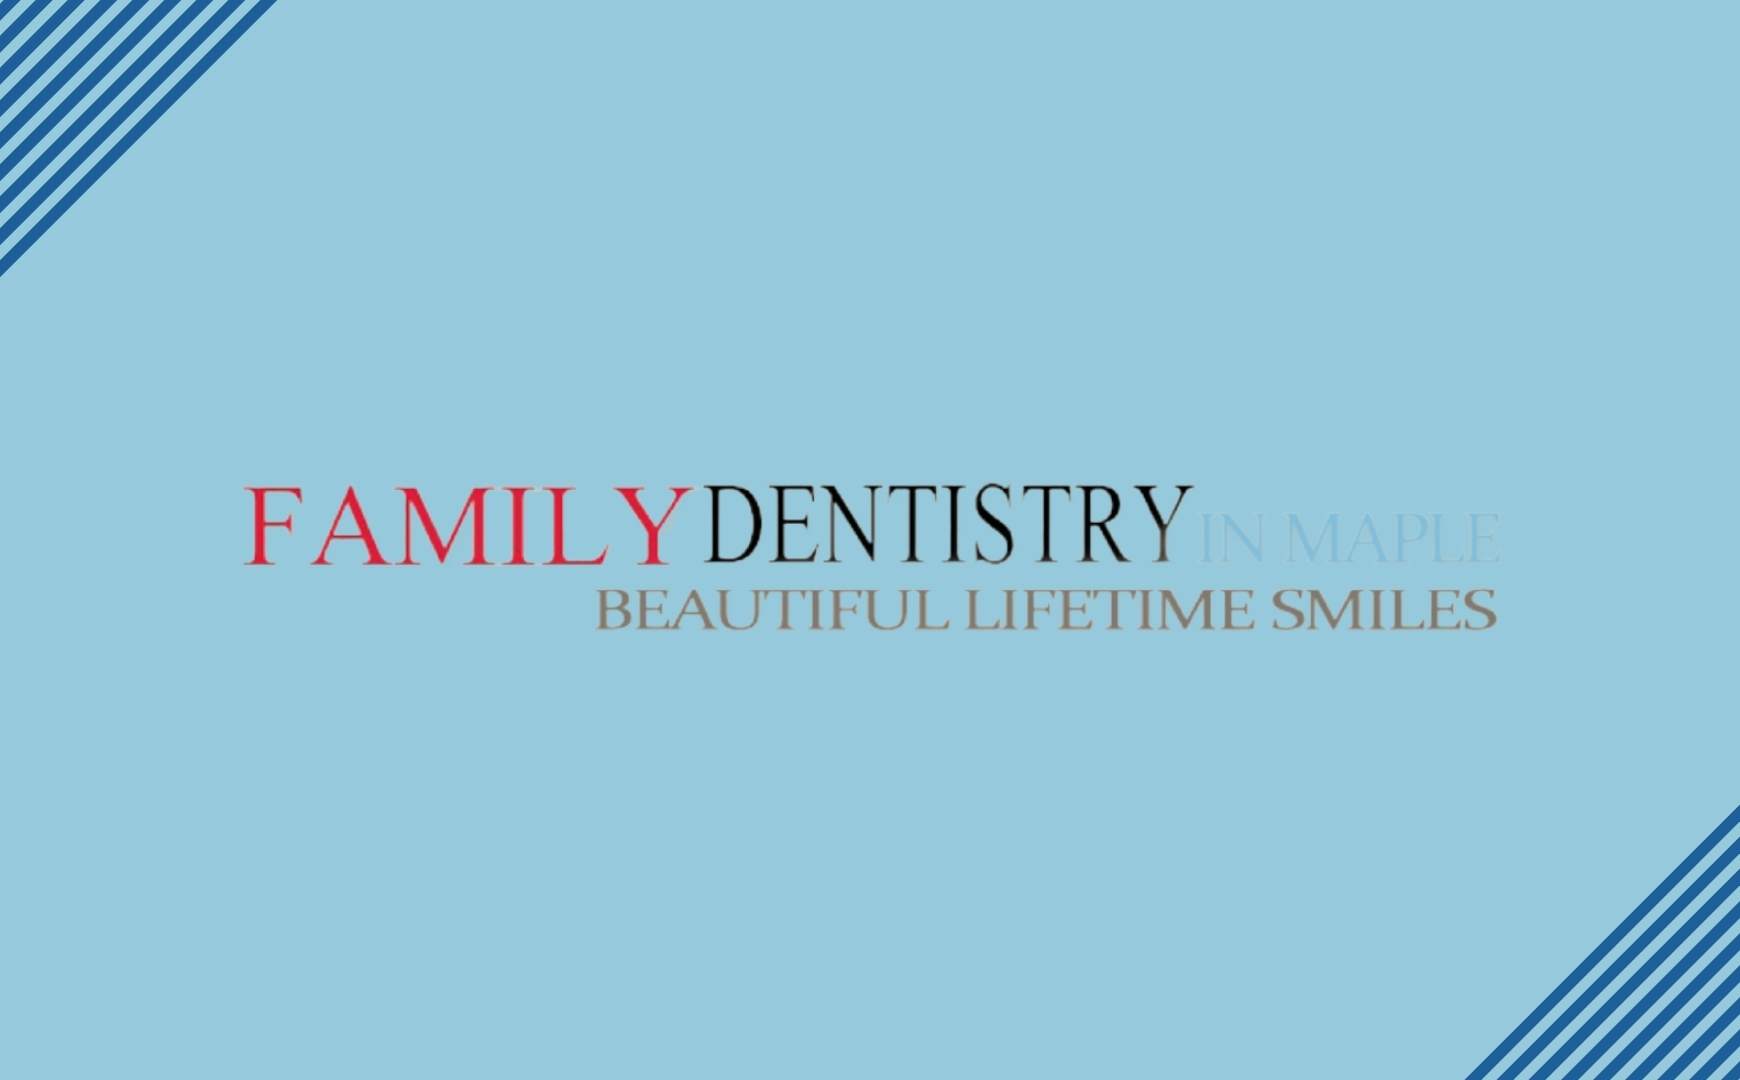 Family Dentistry in Maple Logo